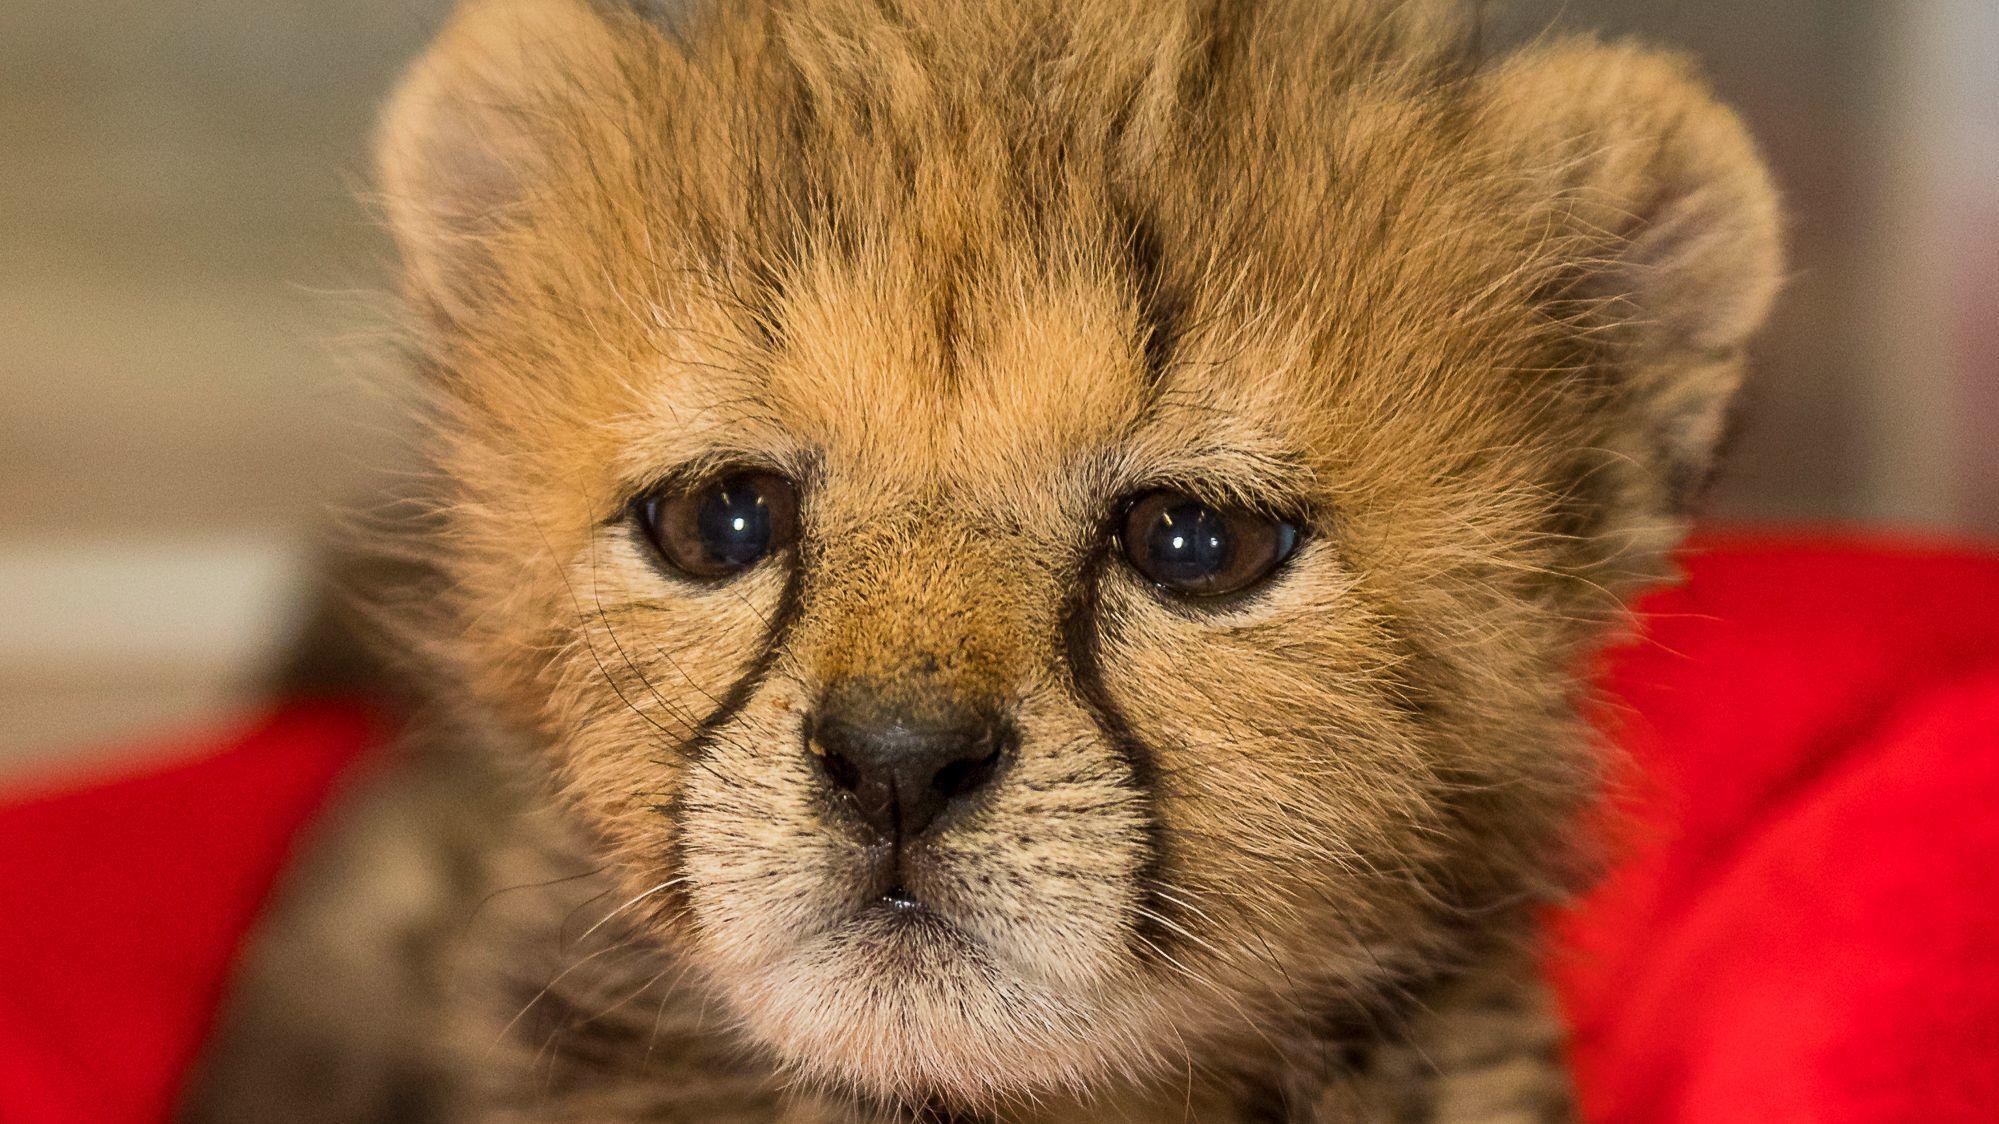 Cheetah cub brings new energy to San Diego Zoo - The San Diego Union ...